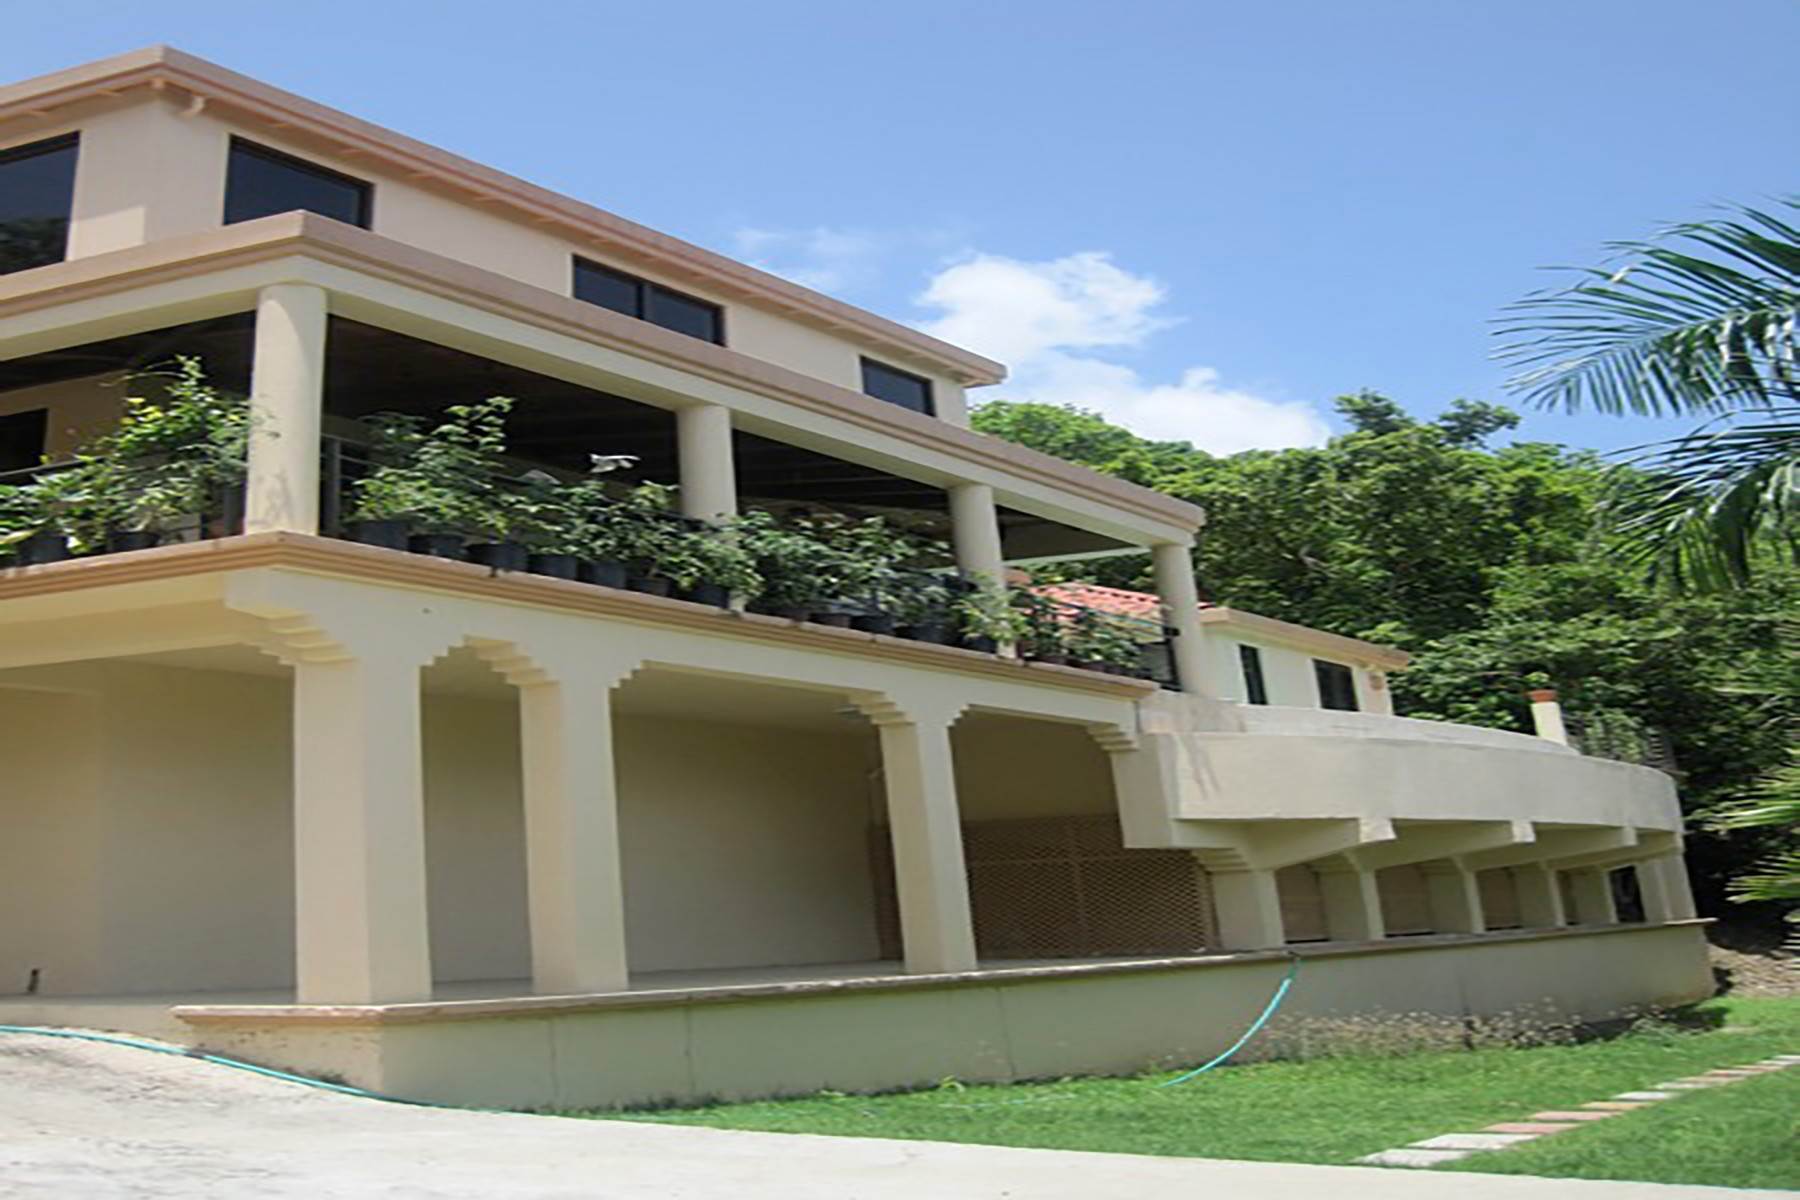 2. Single Family Homes for Sale at Belmont, Tortola British Virgin Islands